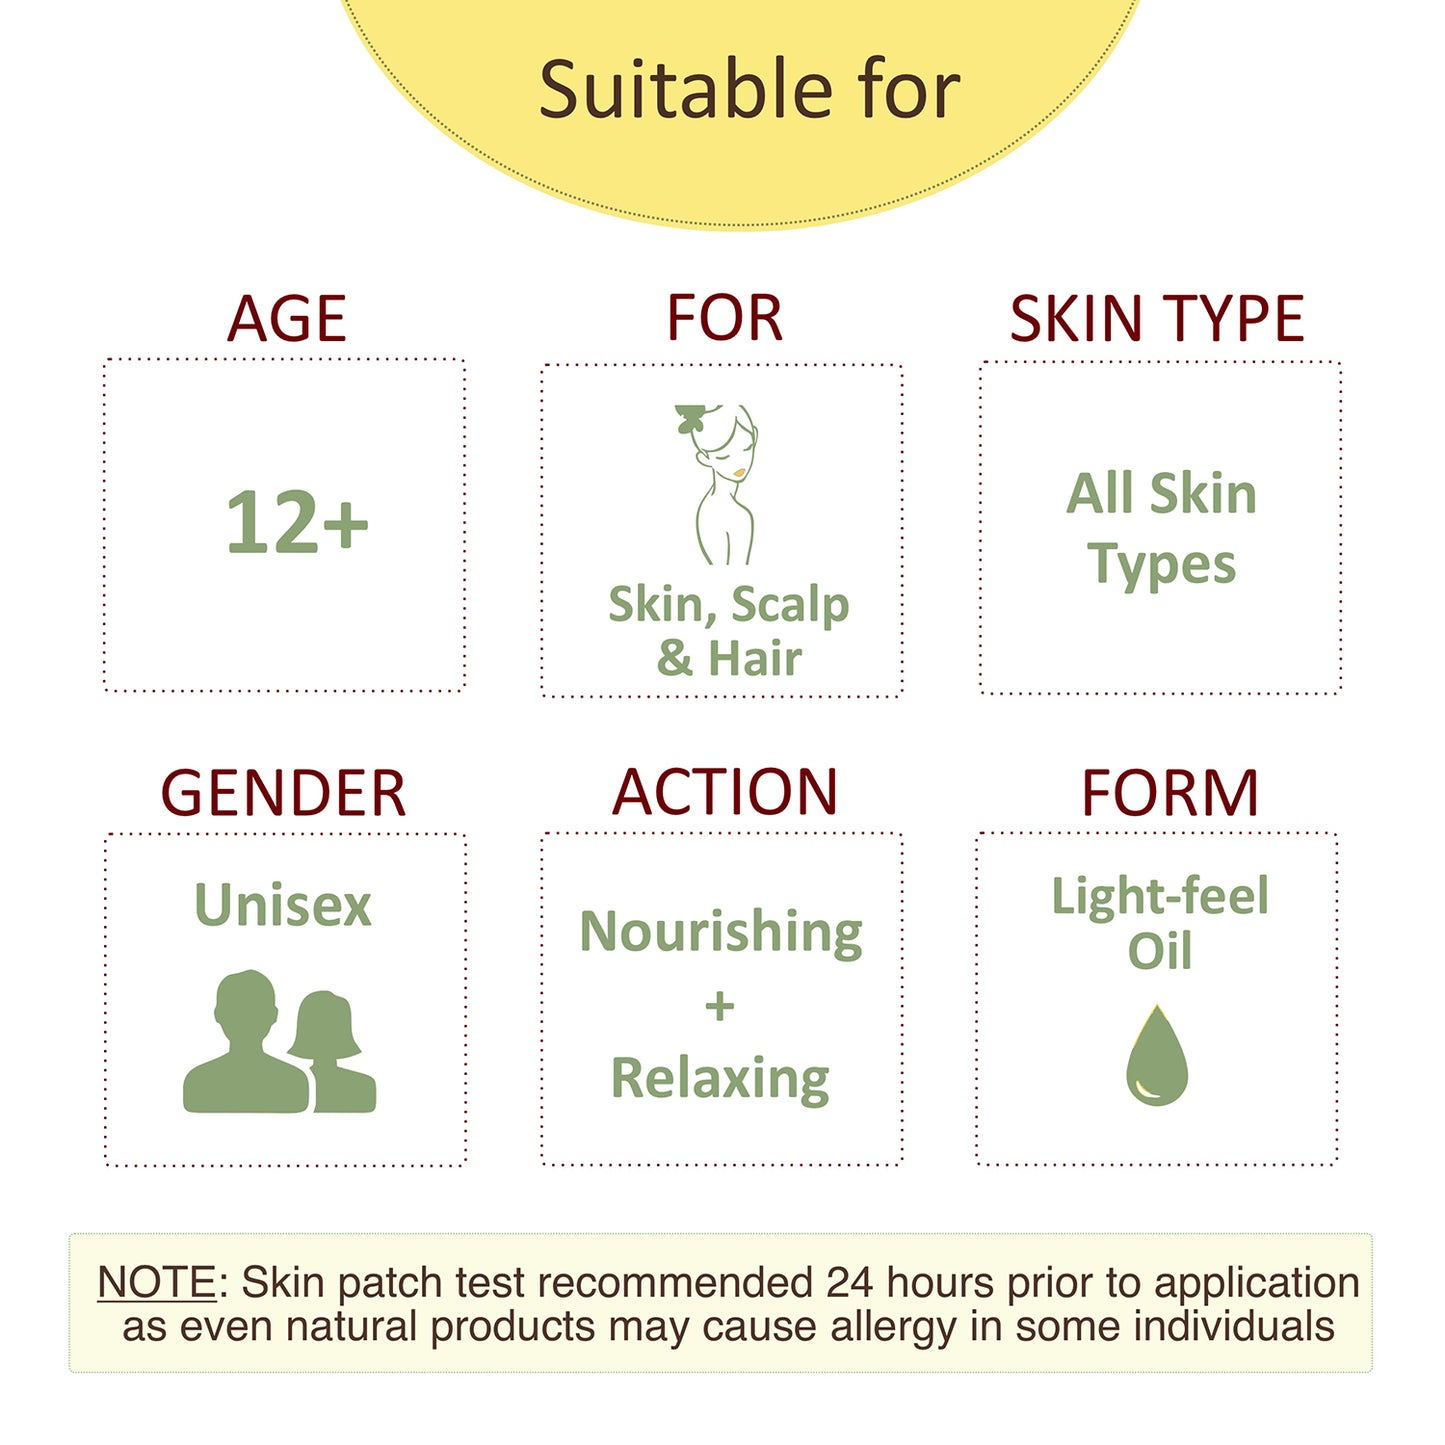 Skin Treat 'mint' Hair & Body Oil - Virgin coconut oil with neem & mint | 100% natural